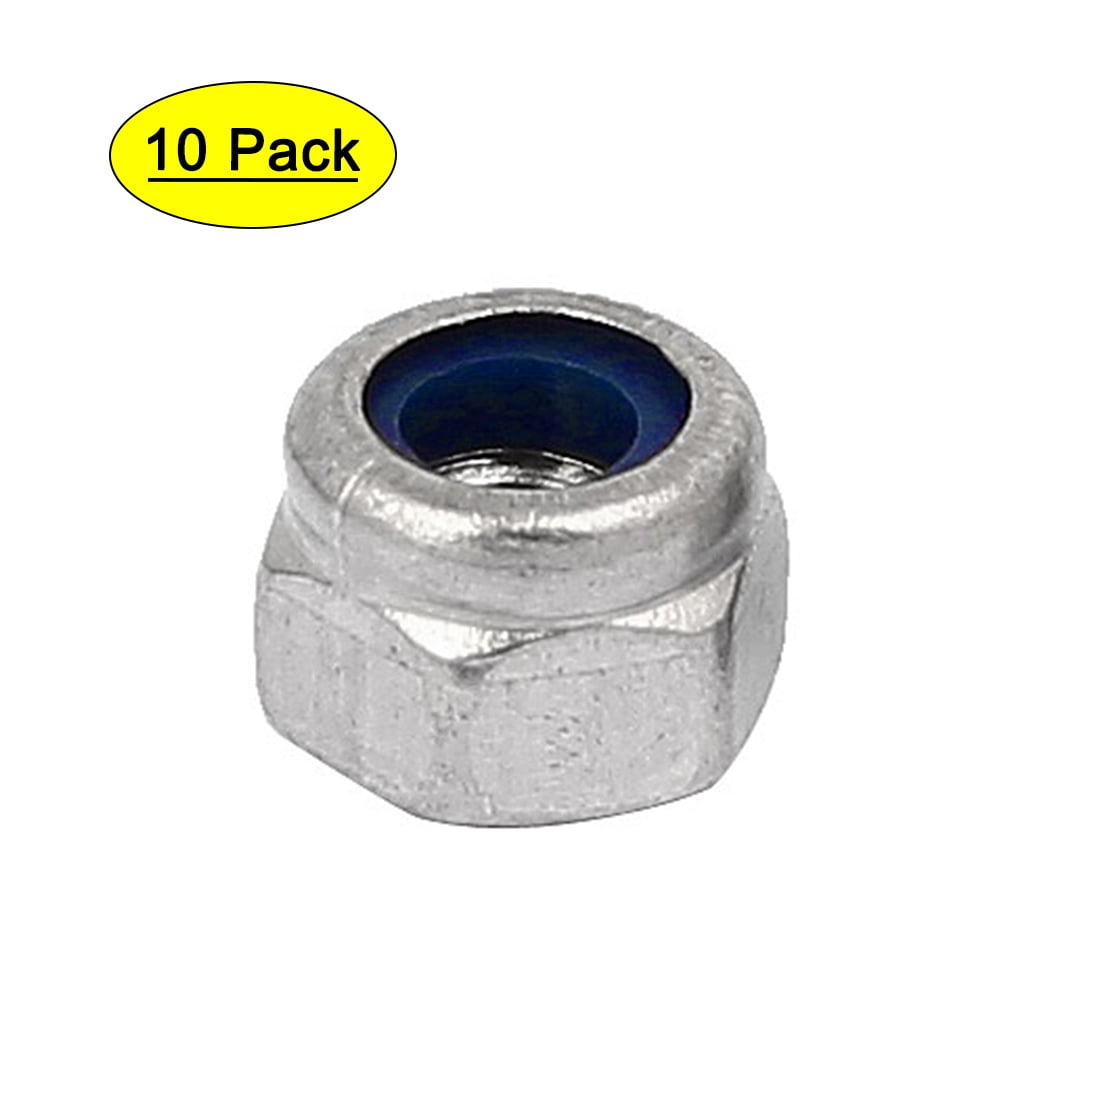 Fine Thread 304 Stainless Steel DIN985 Nylon Insert Lock Nut Hex Nylock Nut 